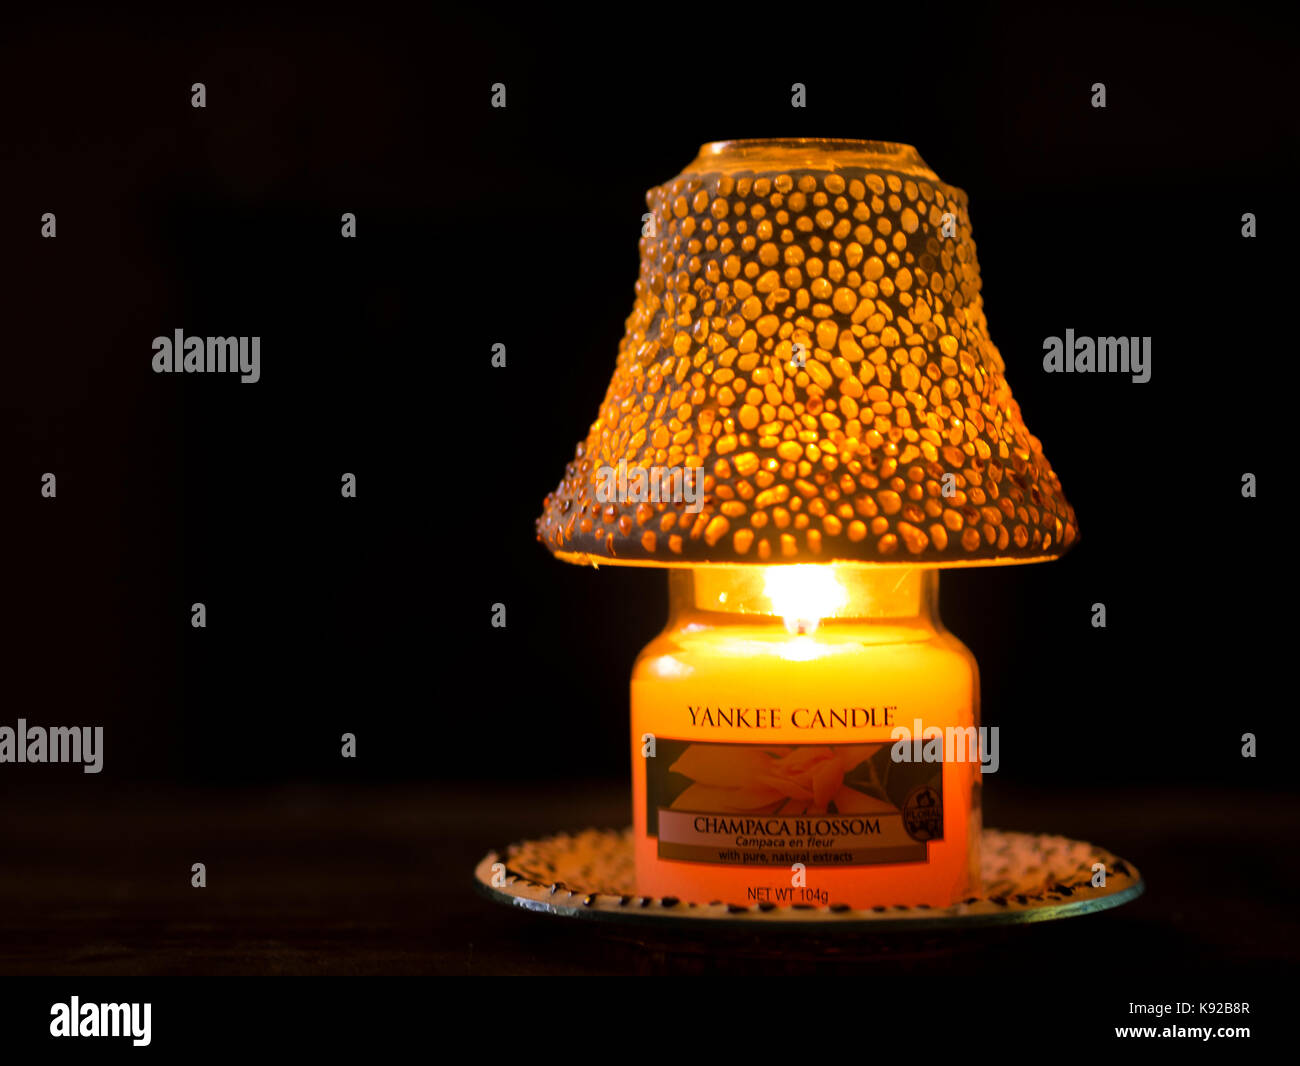 Yankee candle lantern Stock Photo